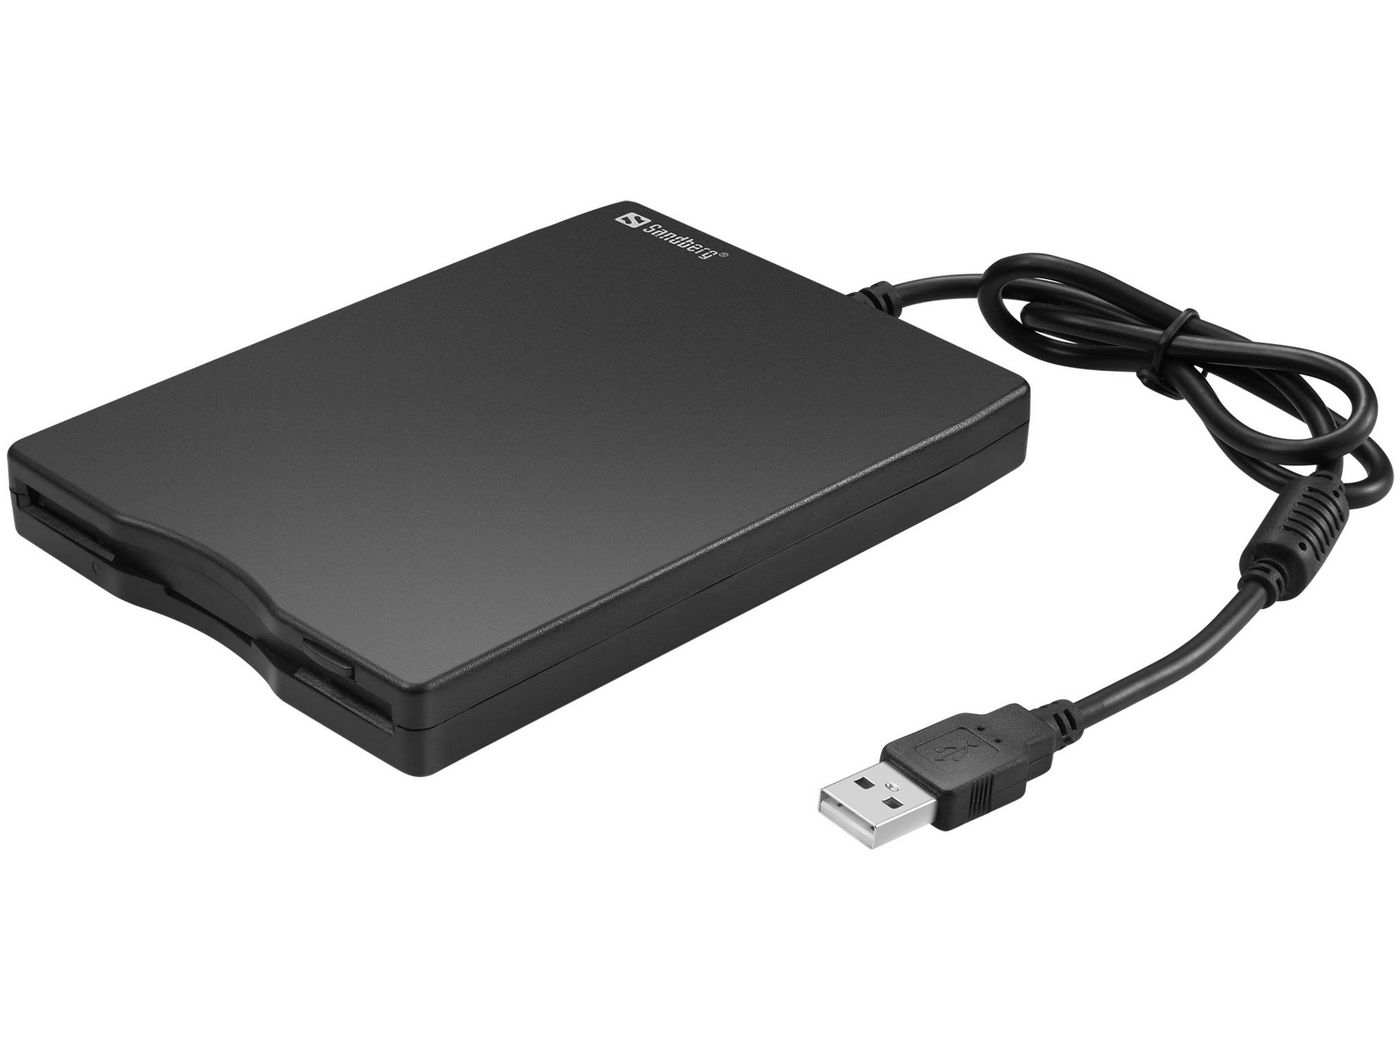 Adapter Sandberg Floppy to USB-A , Slim , External - Albagame